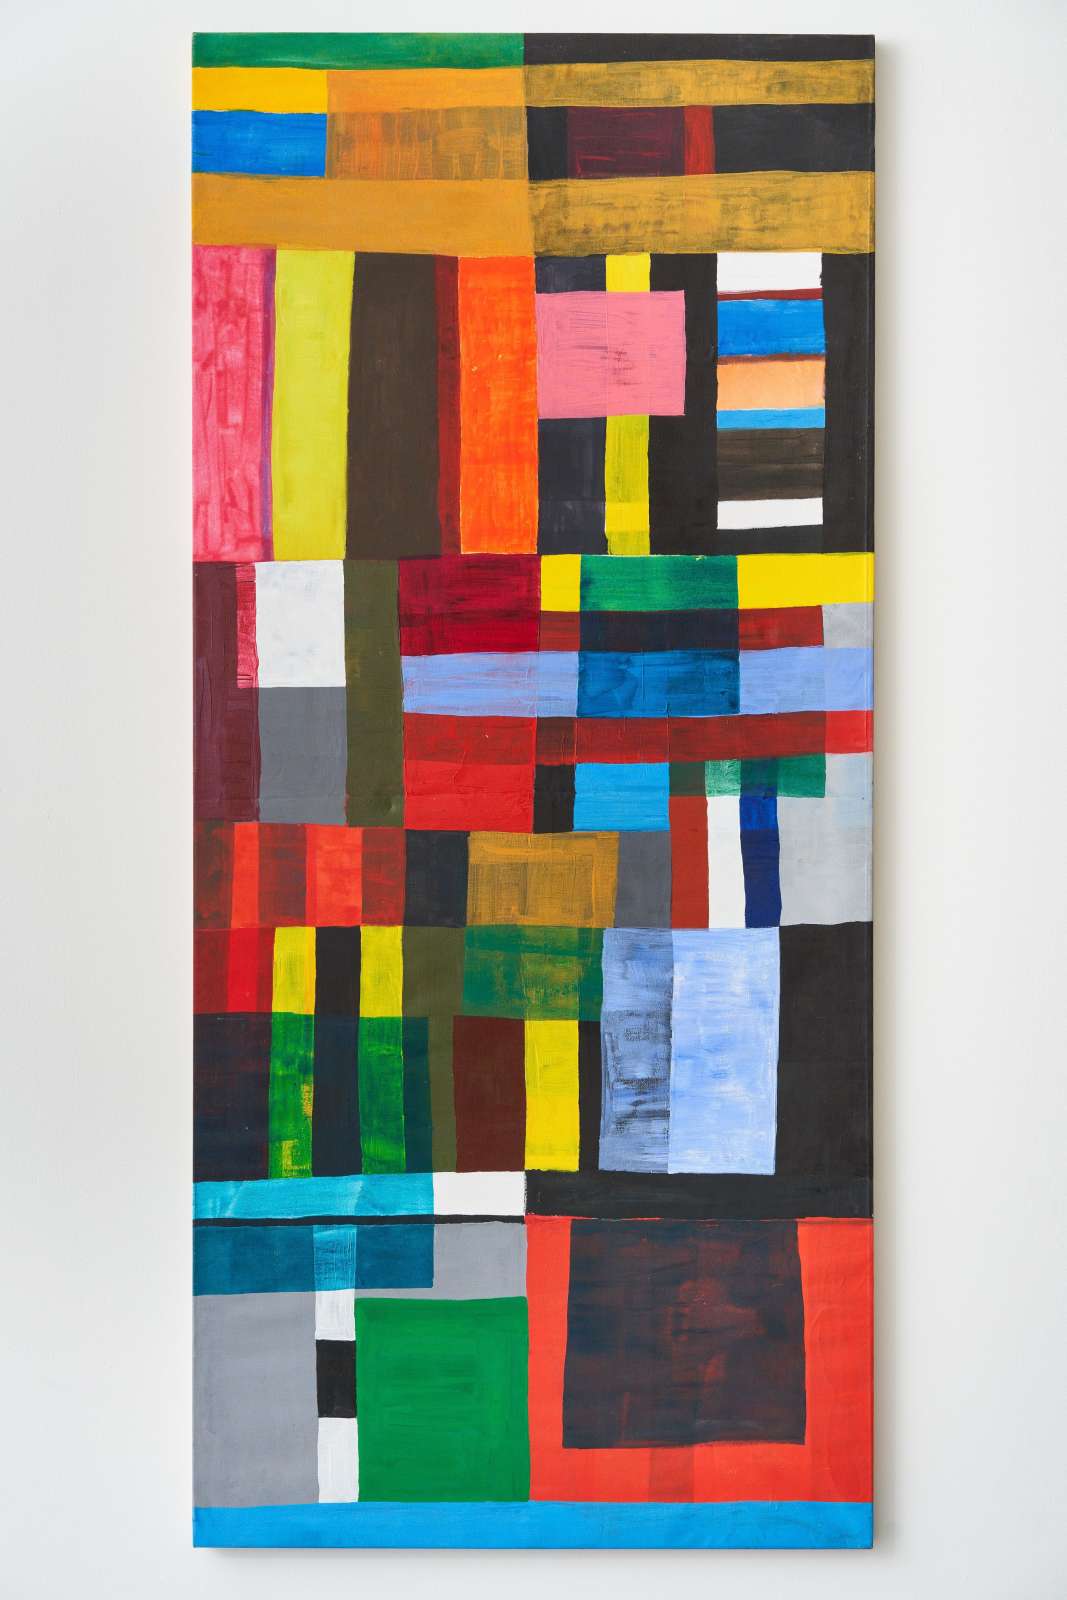 Atta Kwami, 'Untitled'. Acrylic on canvas, 236 x 106.5 cm.